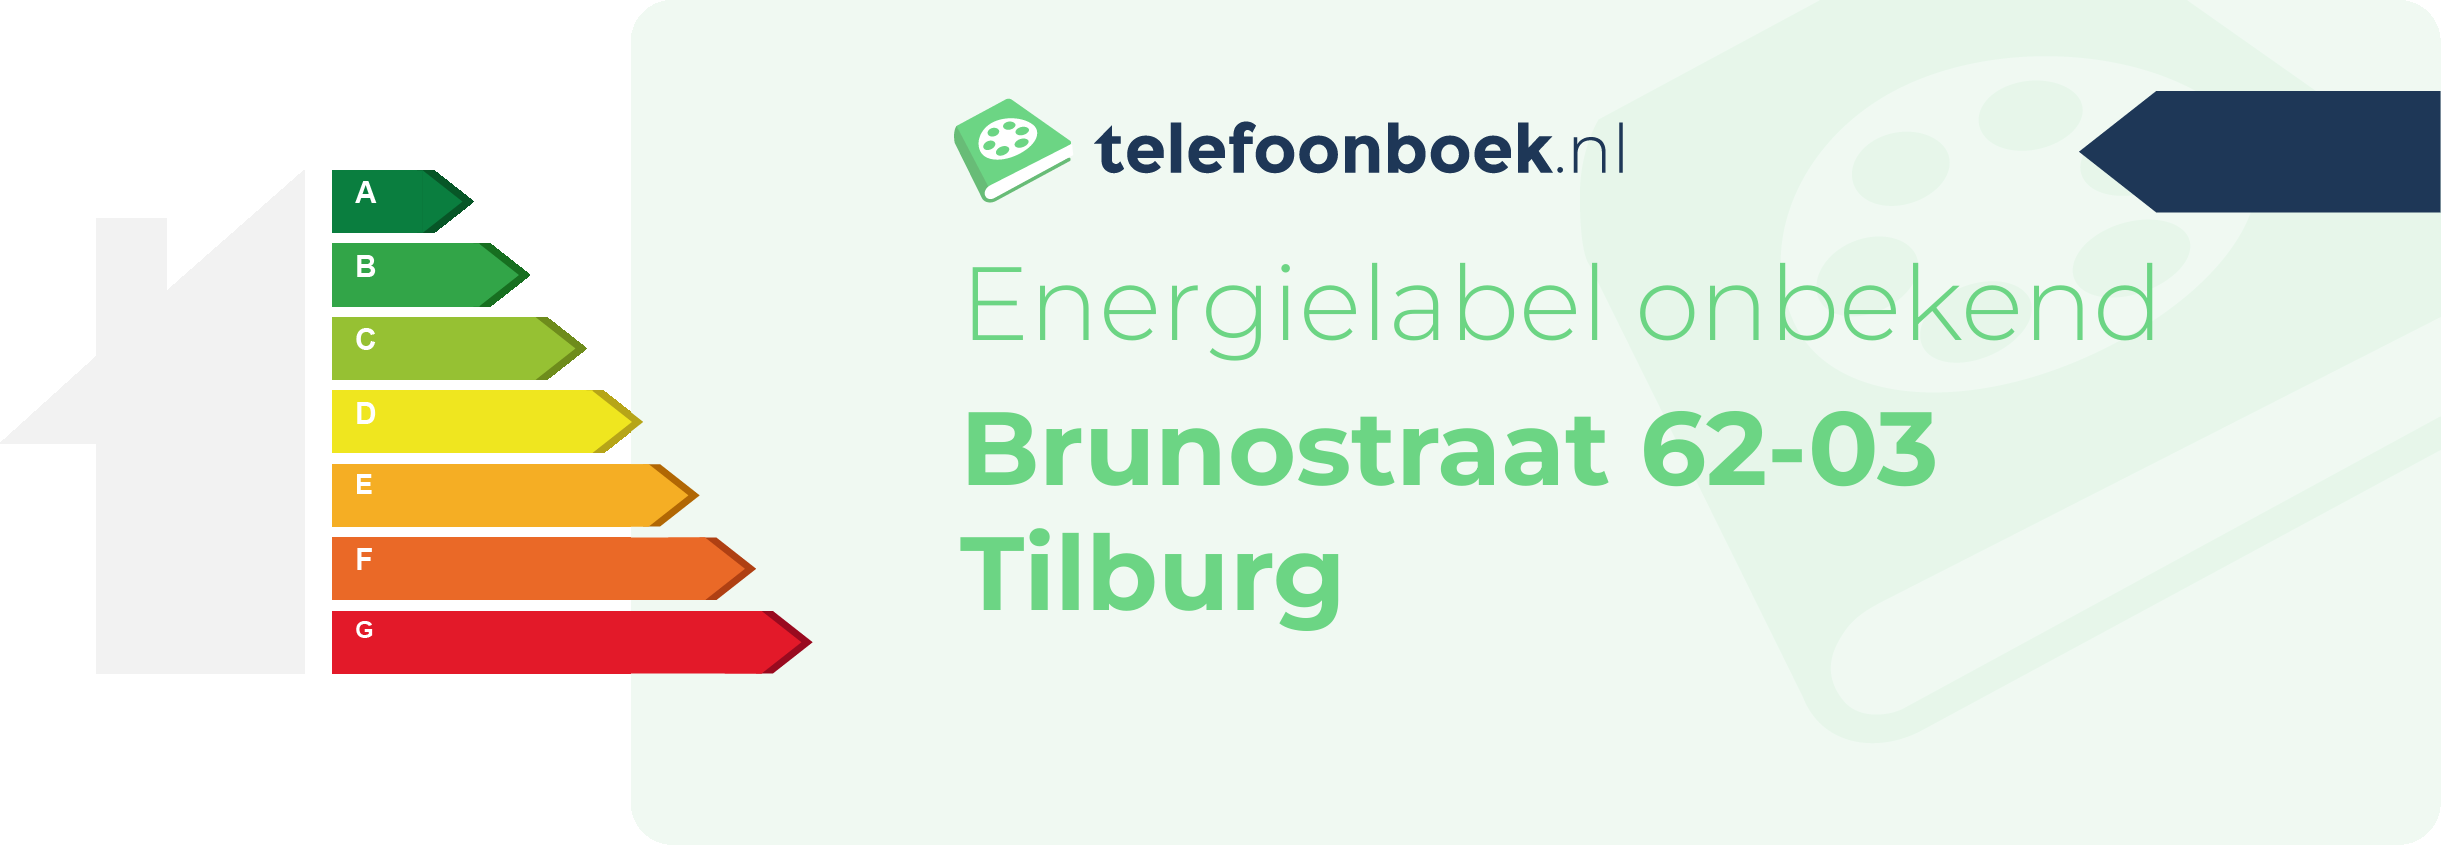 Energielabel Brunostraat 62-03 Tilburg